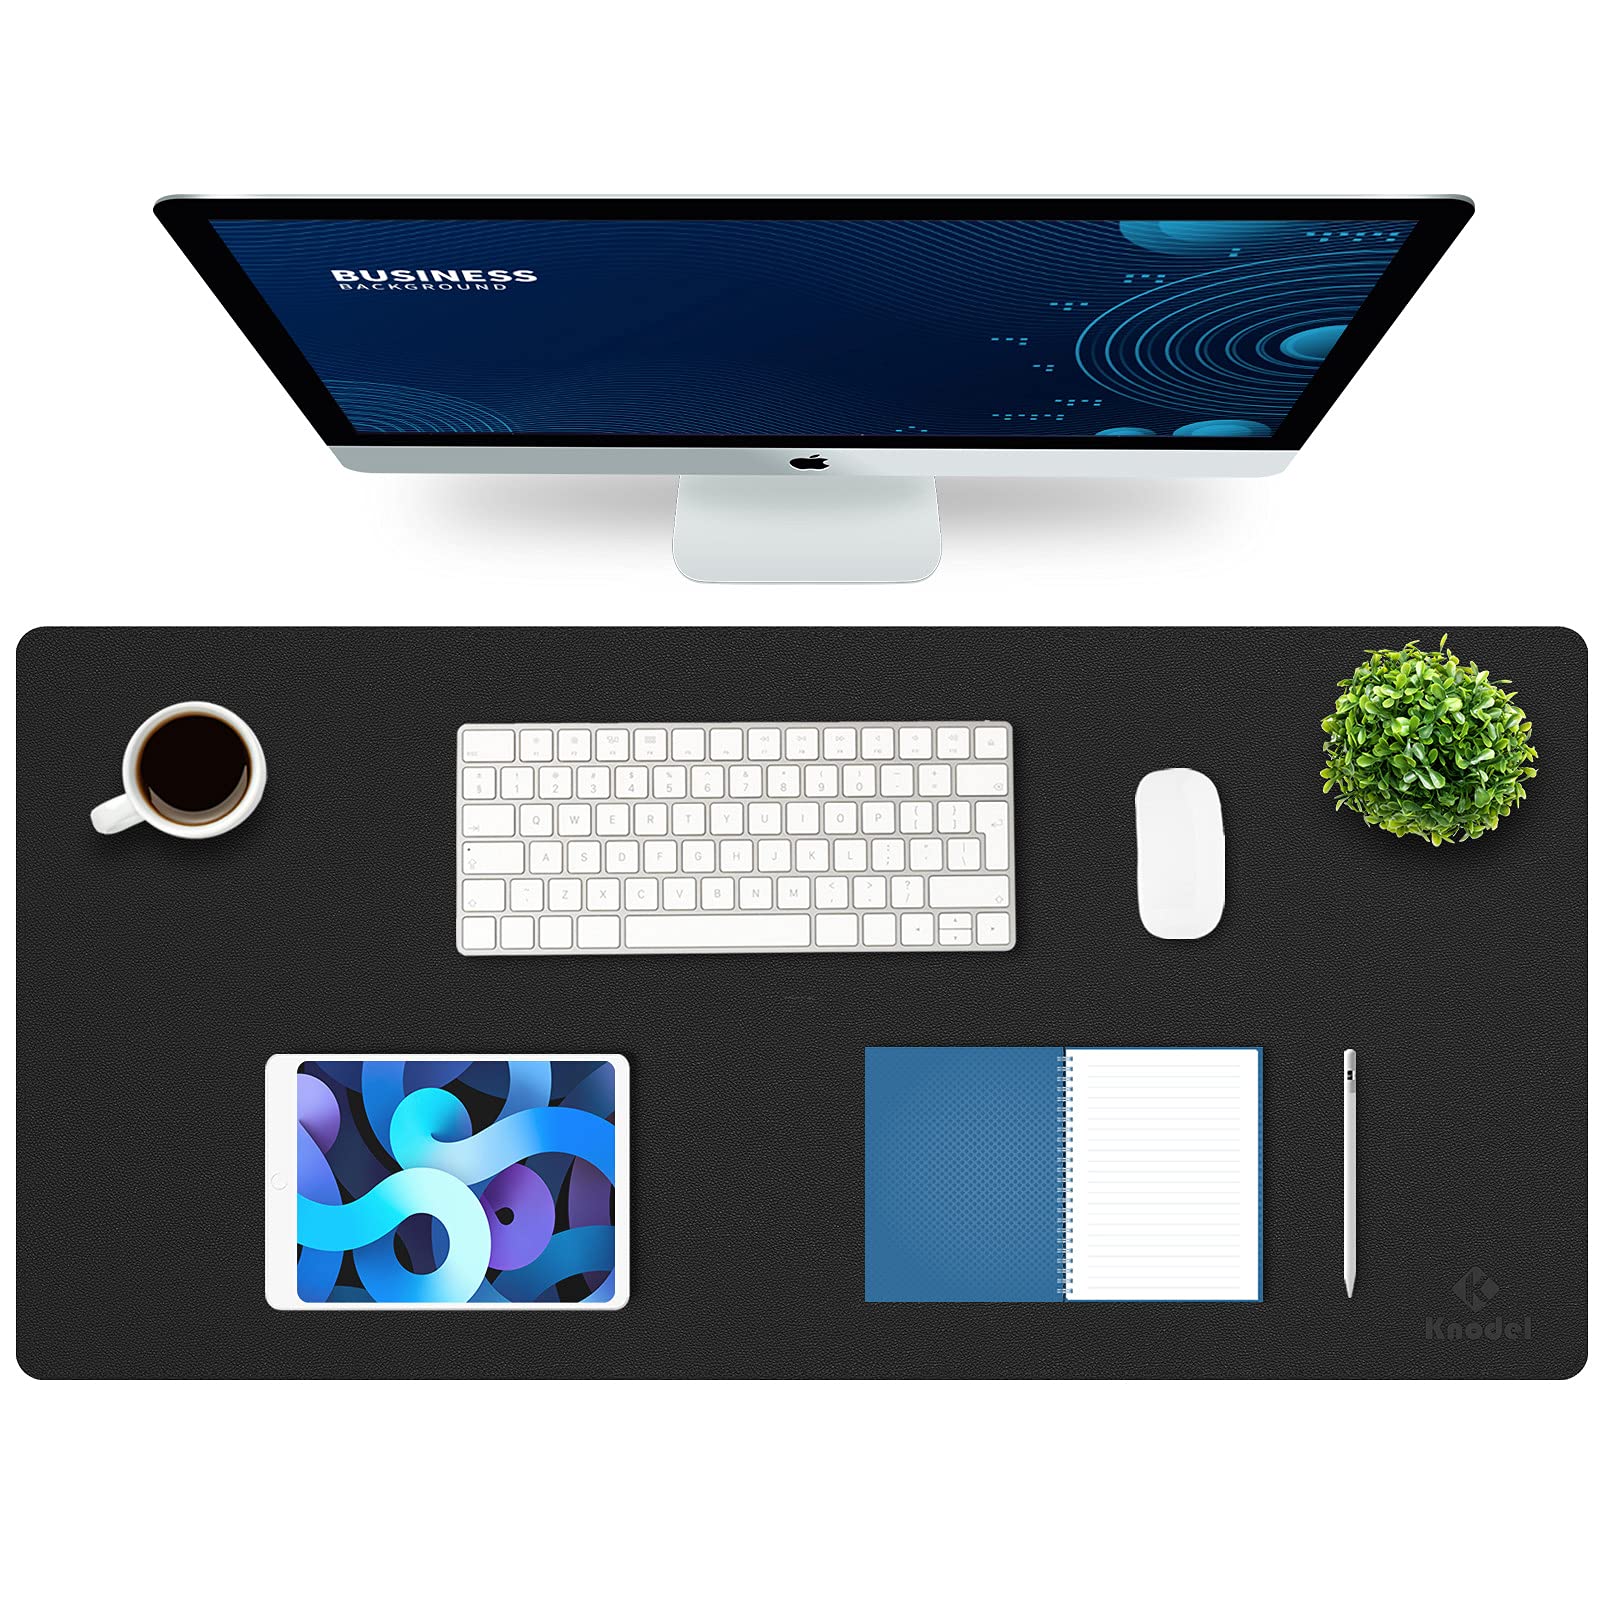 Knodel Desk Pad, Office Desk Mat, 43cm x 90cm PU Leather Desk Blotter, Laptop Desk Mat, Waterproof Desk Writing Pad for Office and Home, Dual-Sided (Black)